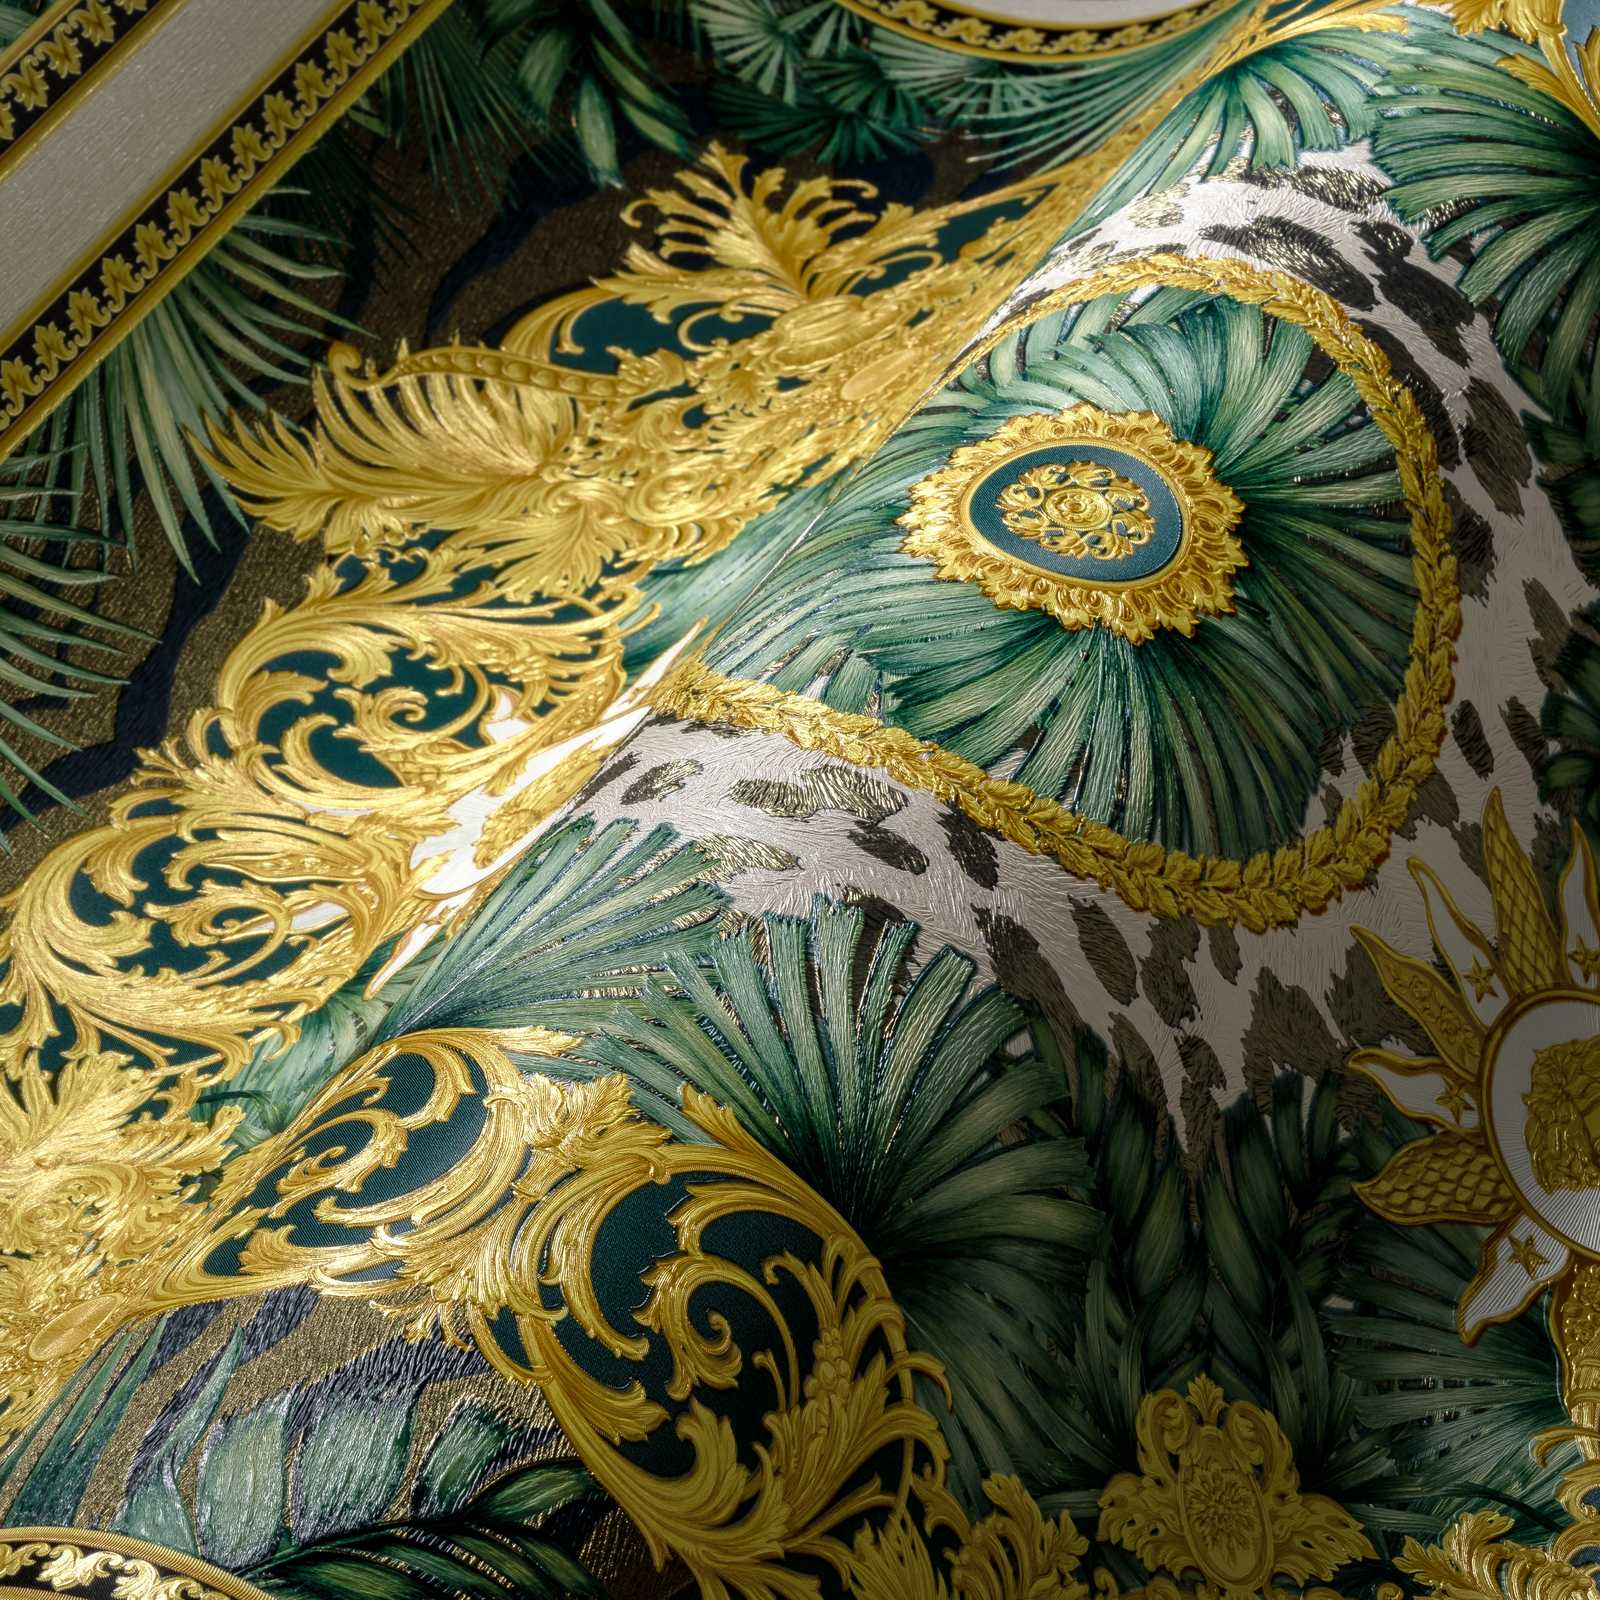             VERSACE Tapete Kolonialstil Design mit Gold-Ornament – Grün, Metallic
        